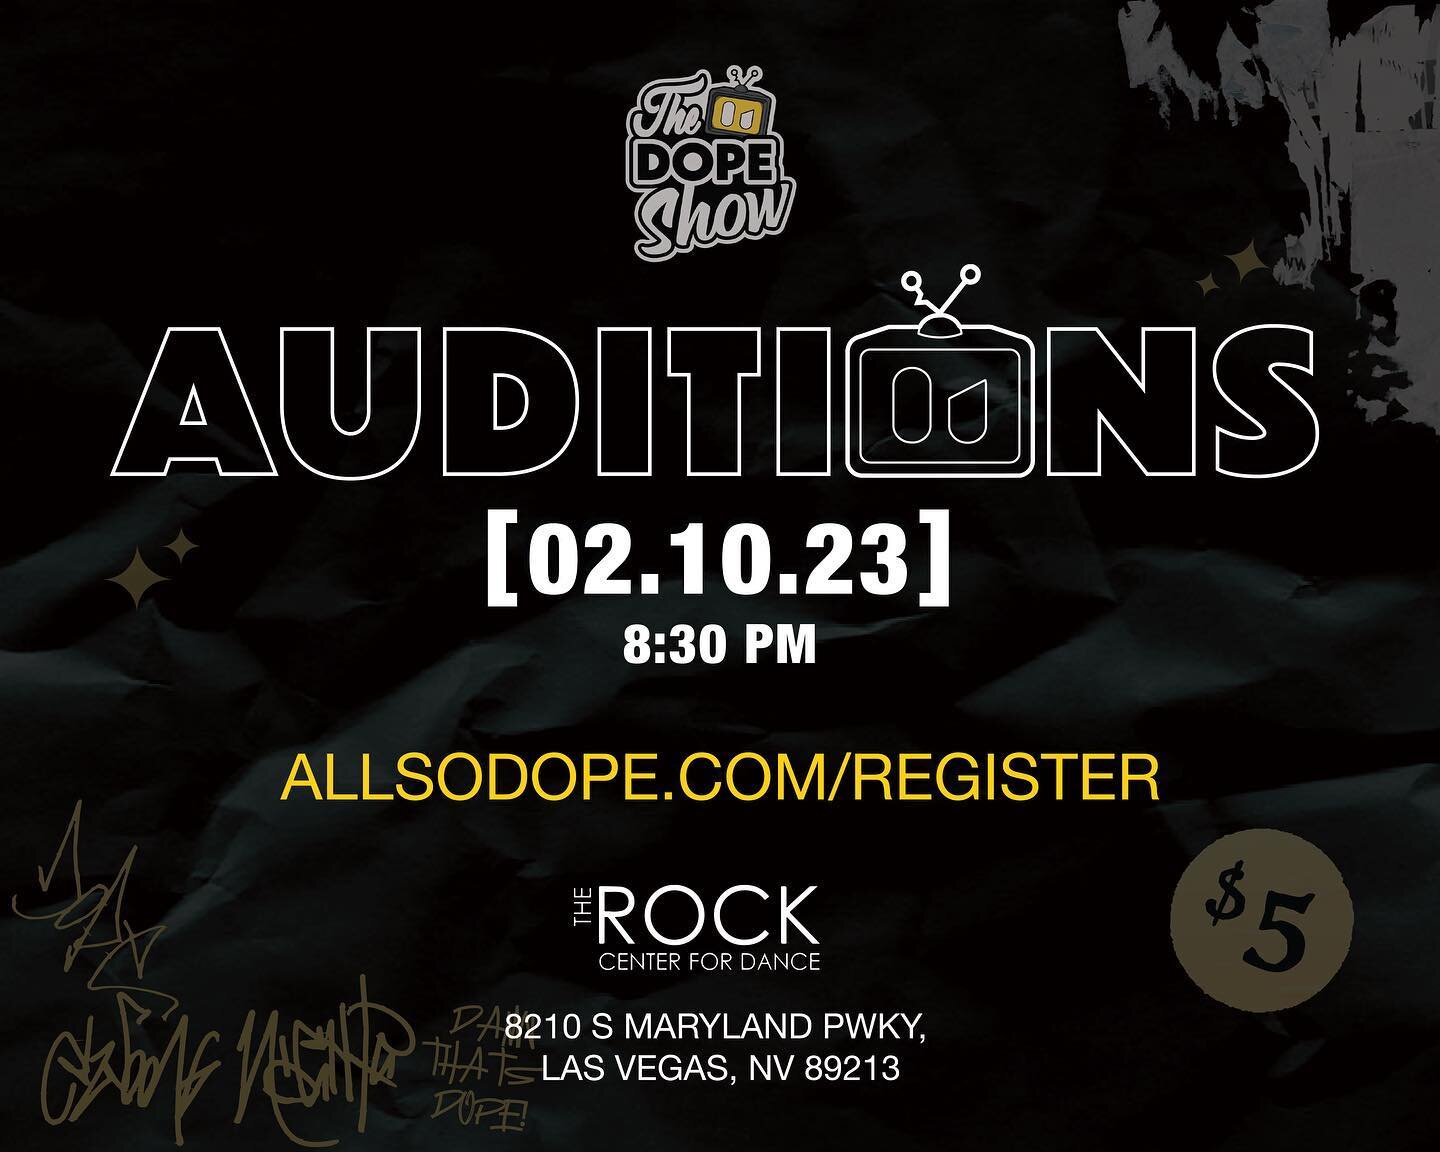 🔗 allsodope.com/register

The DOPE Show AUDITIONS
02.10.23 | 8:30 PM | $5
@therockcenterfordance 
Las Vegas, NV

#thedopeshow #allsodope